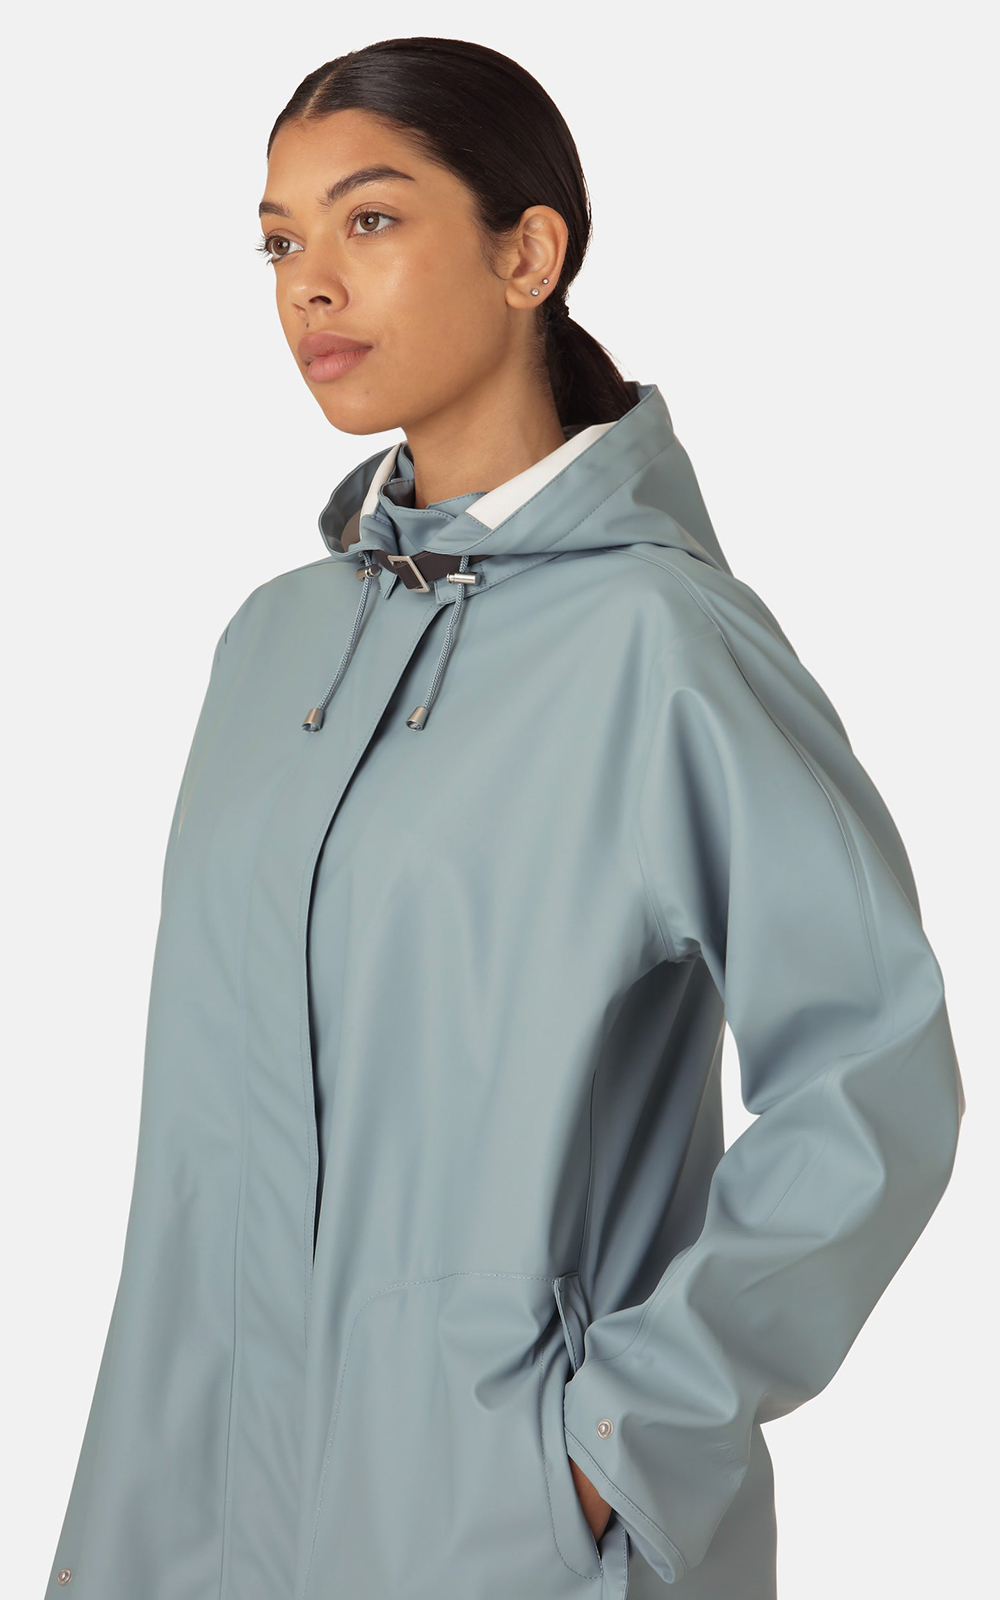 Detachable Hooded Coat  product photo.